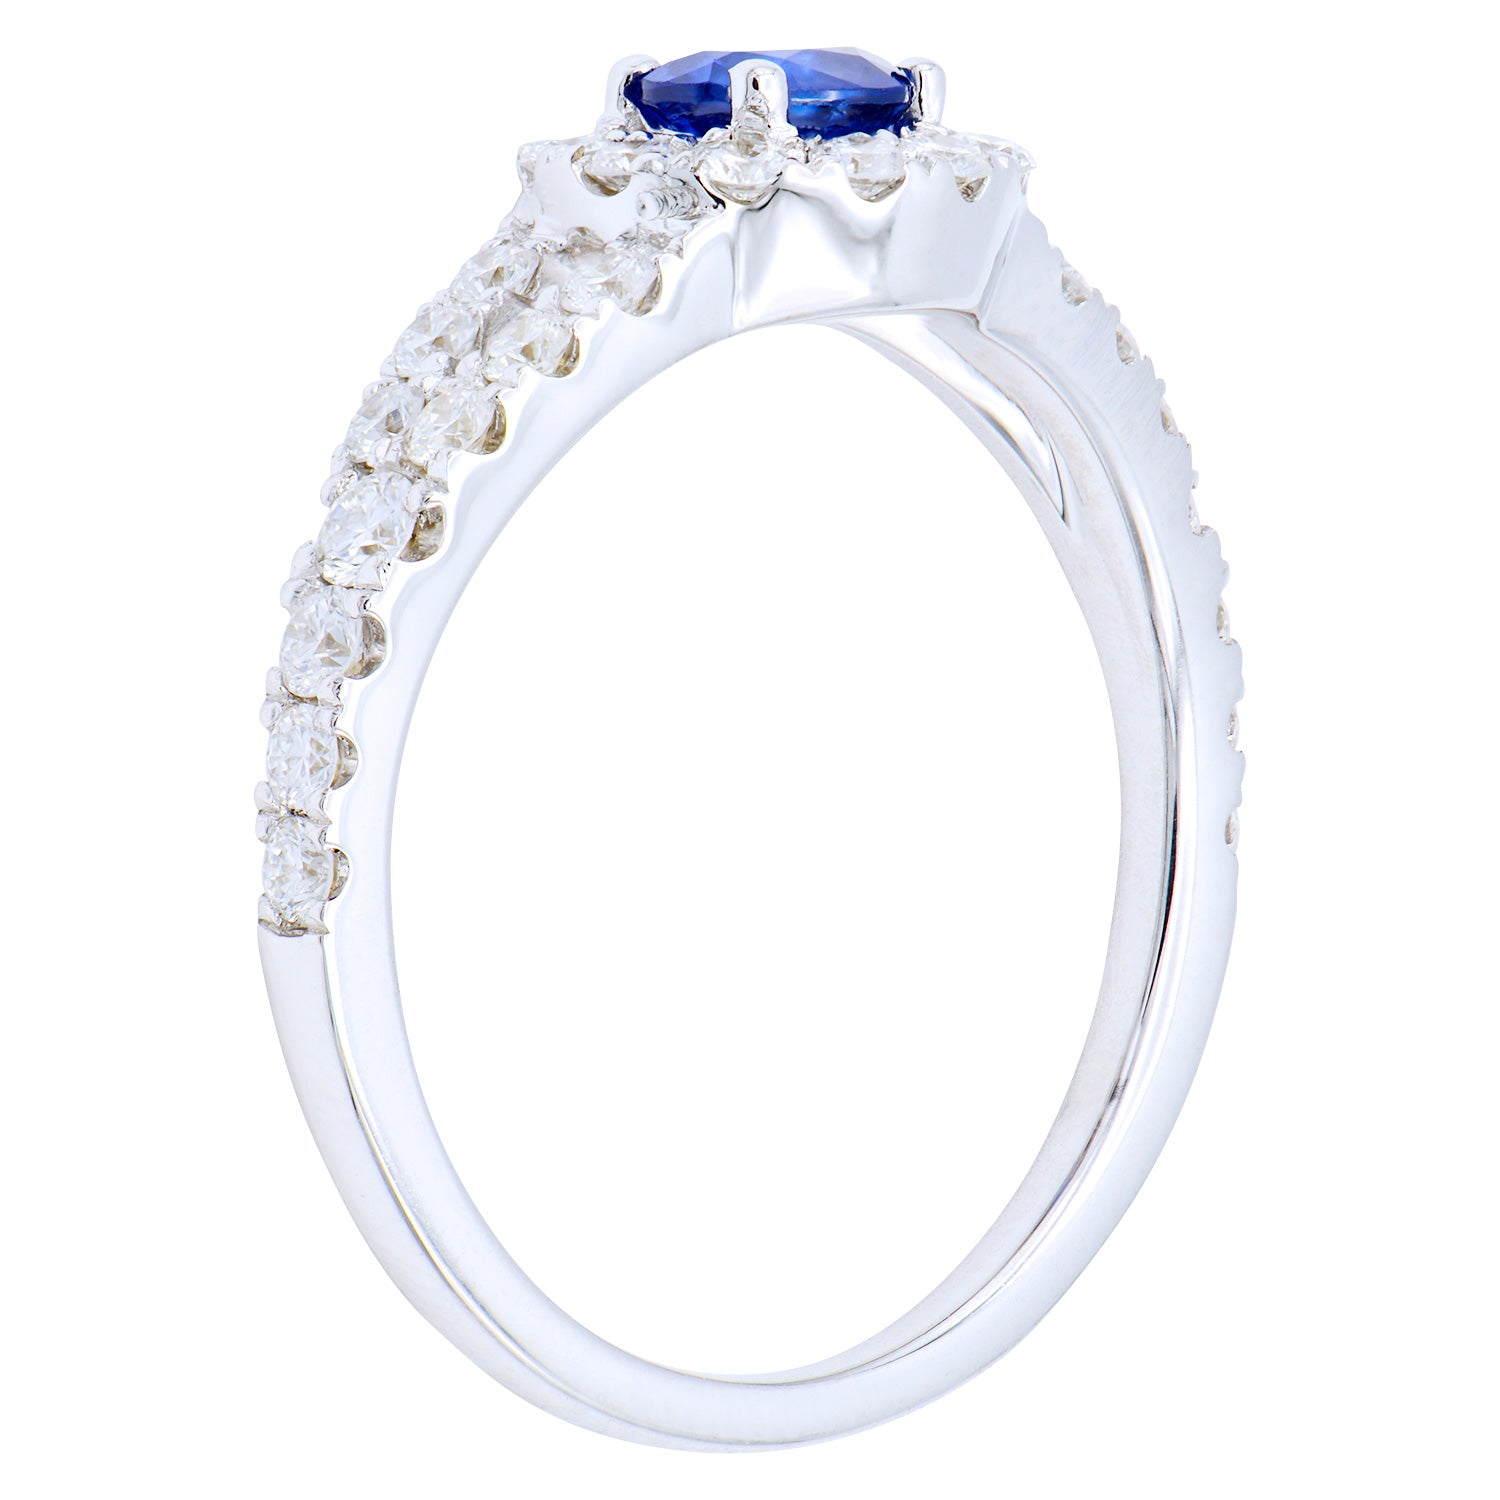 Sapphire and Diamond Split Shank Ring